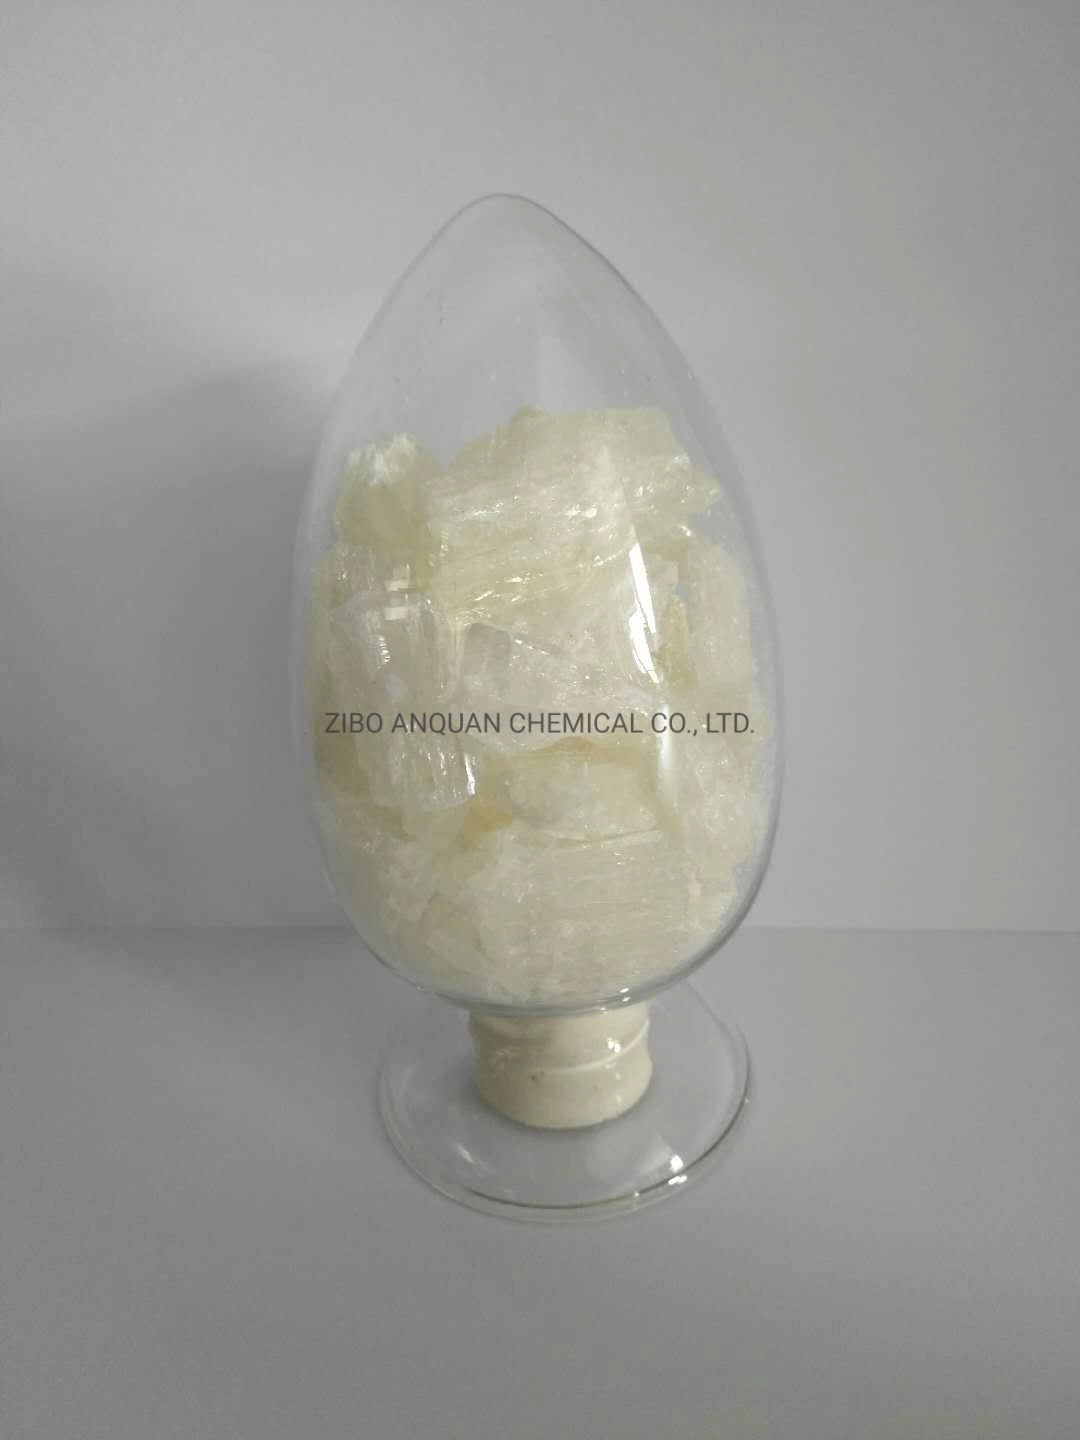 Полимерные материалы 4 4' - Oxybisbenzenamine CAS 101-80-4